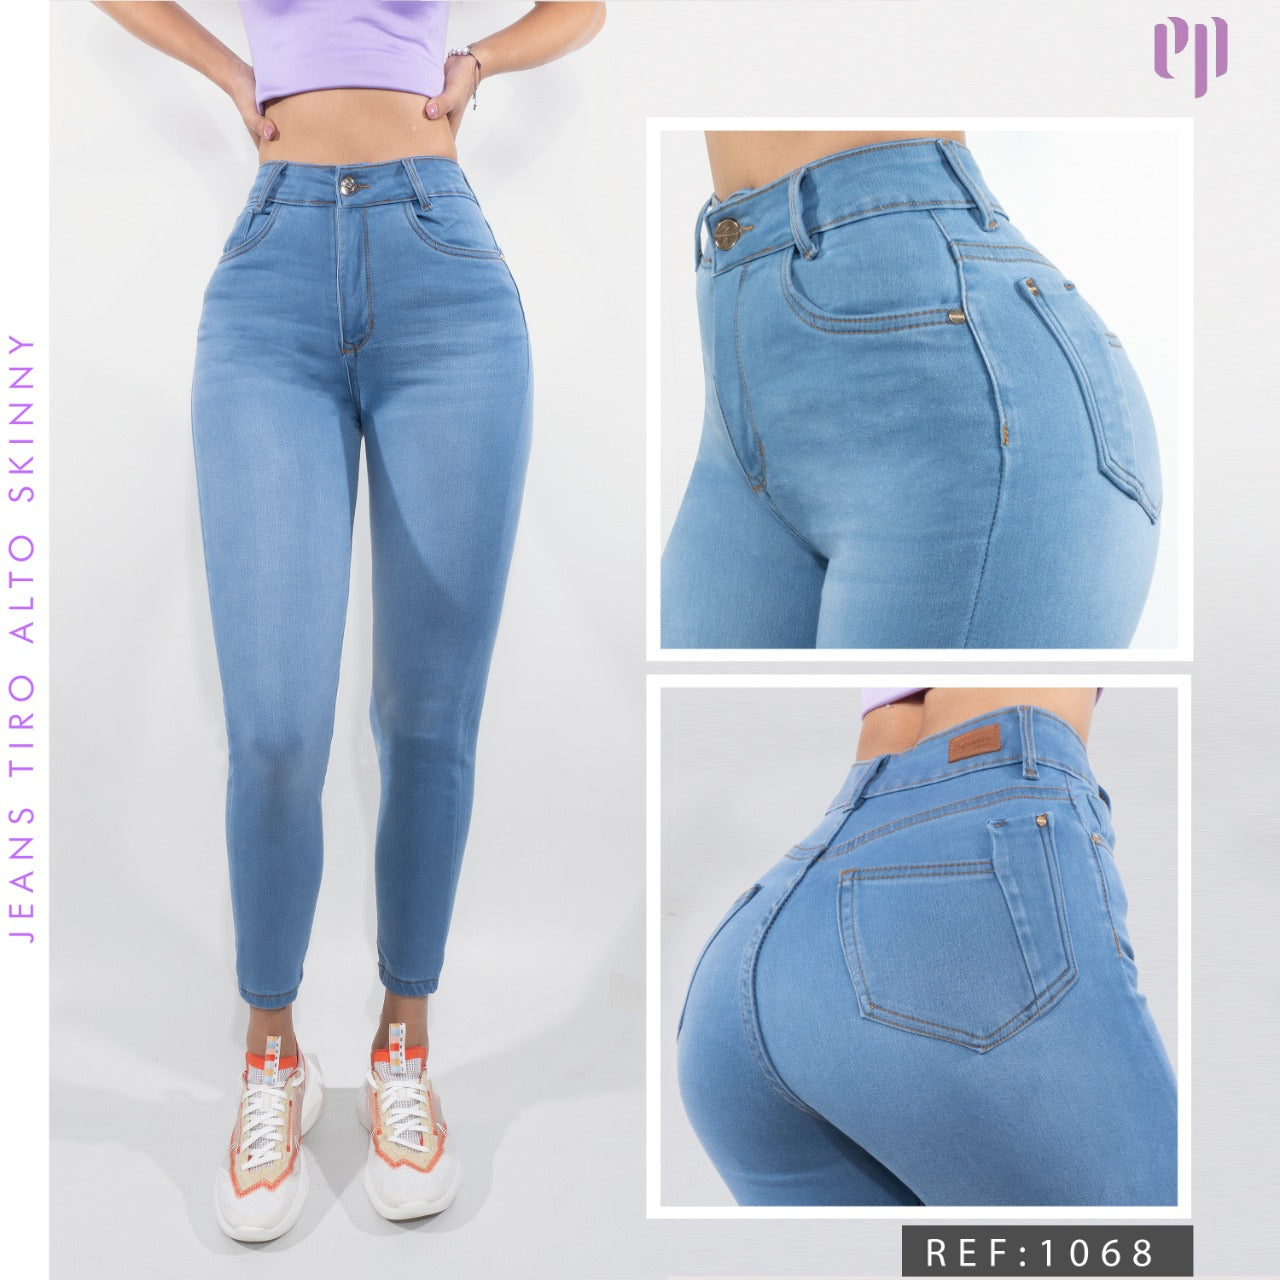 Jeans Mujer Tiro Alto 1068 – SKINNY PREMIUM